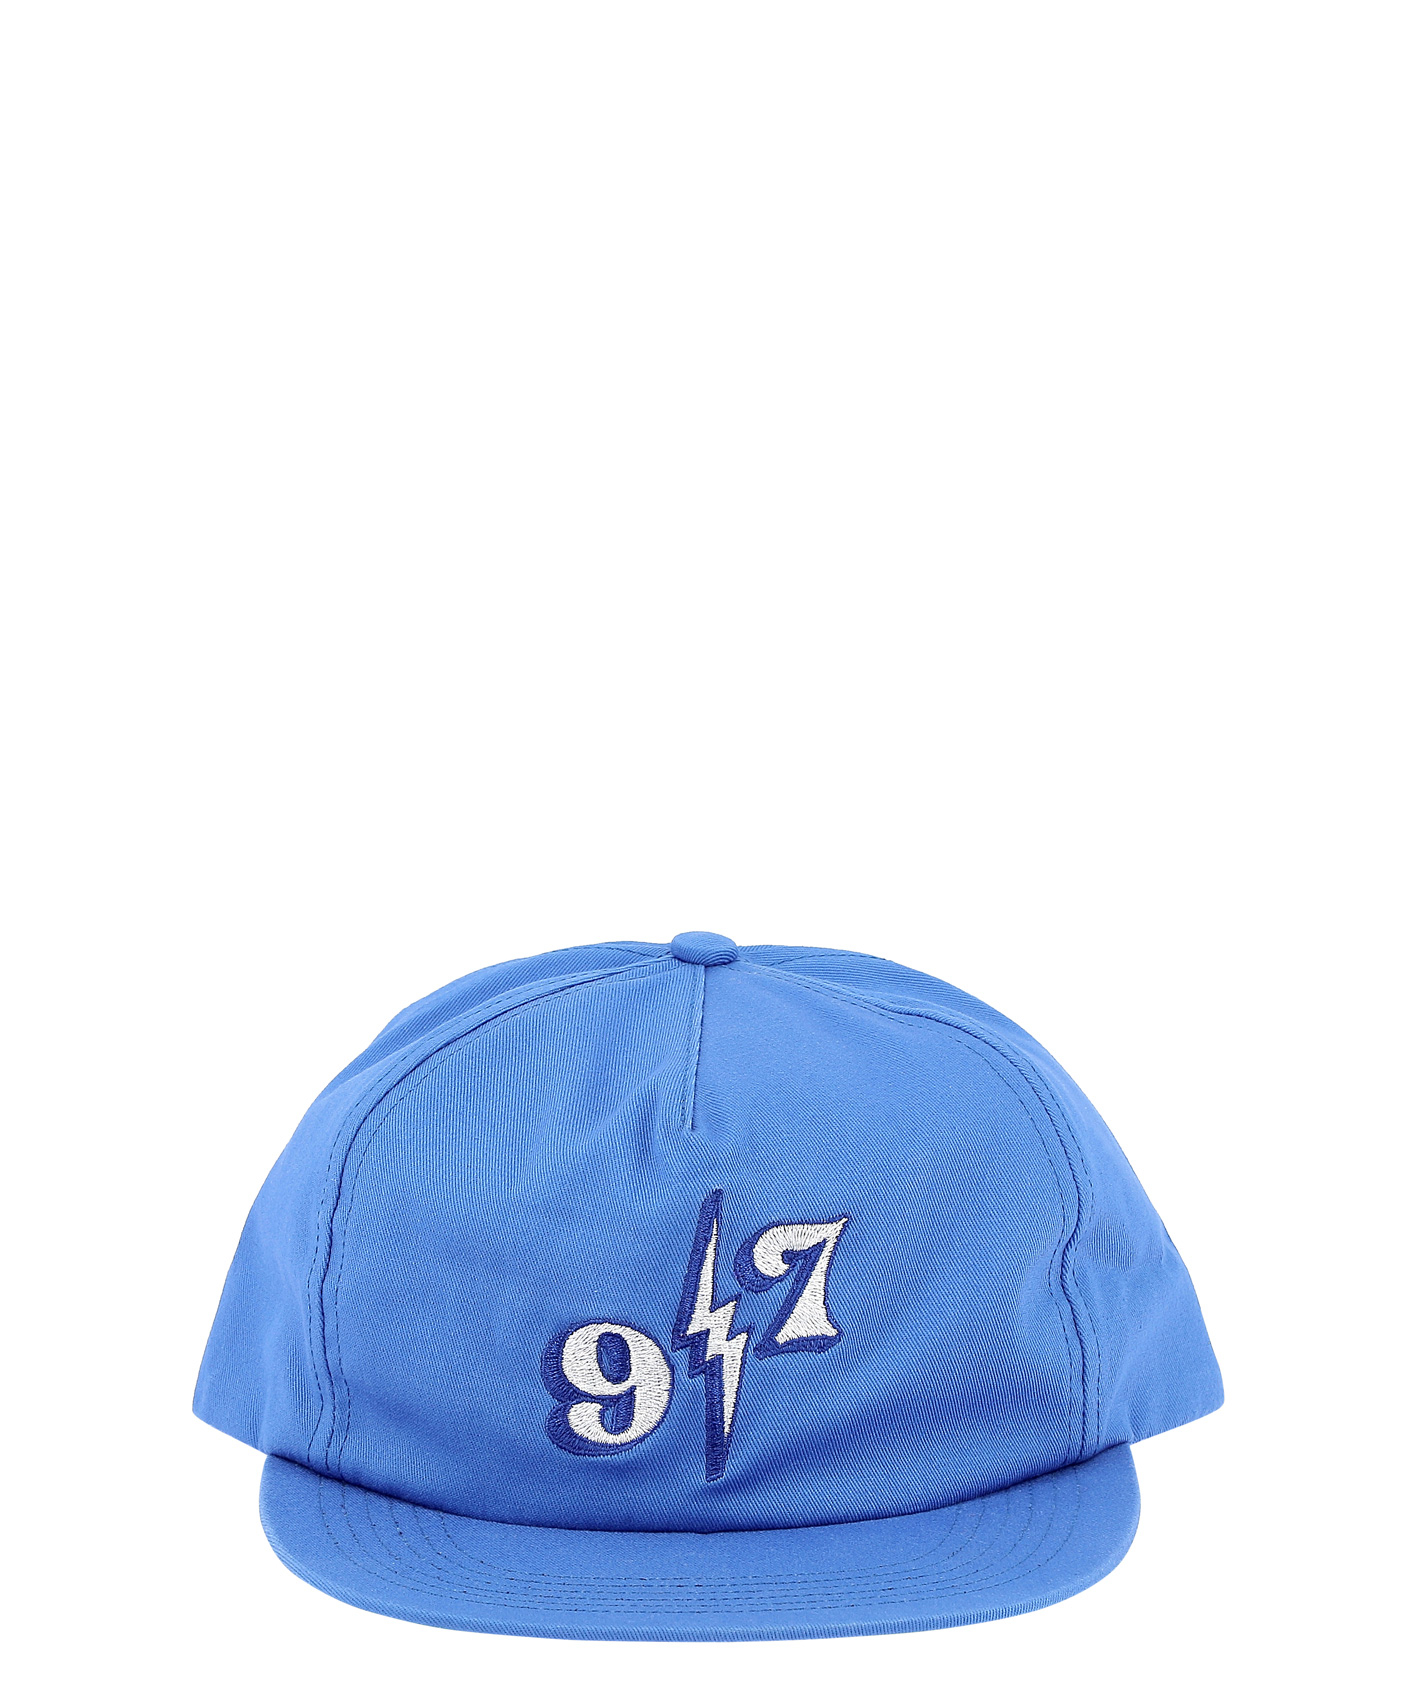 Call Me 917 蓝色男士礼帽 Bolt Snapbackroyal In Blue